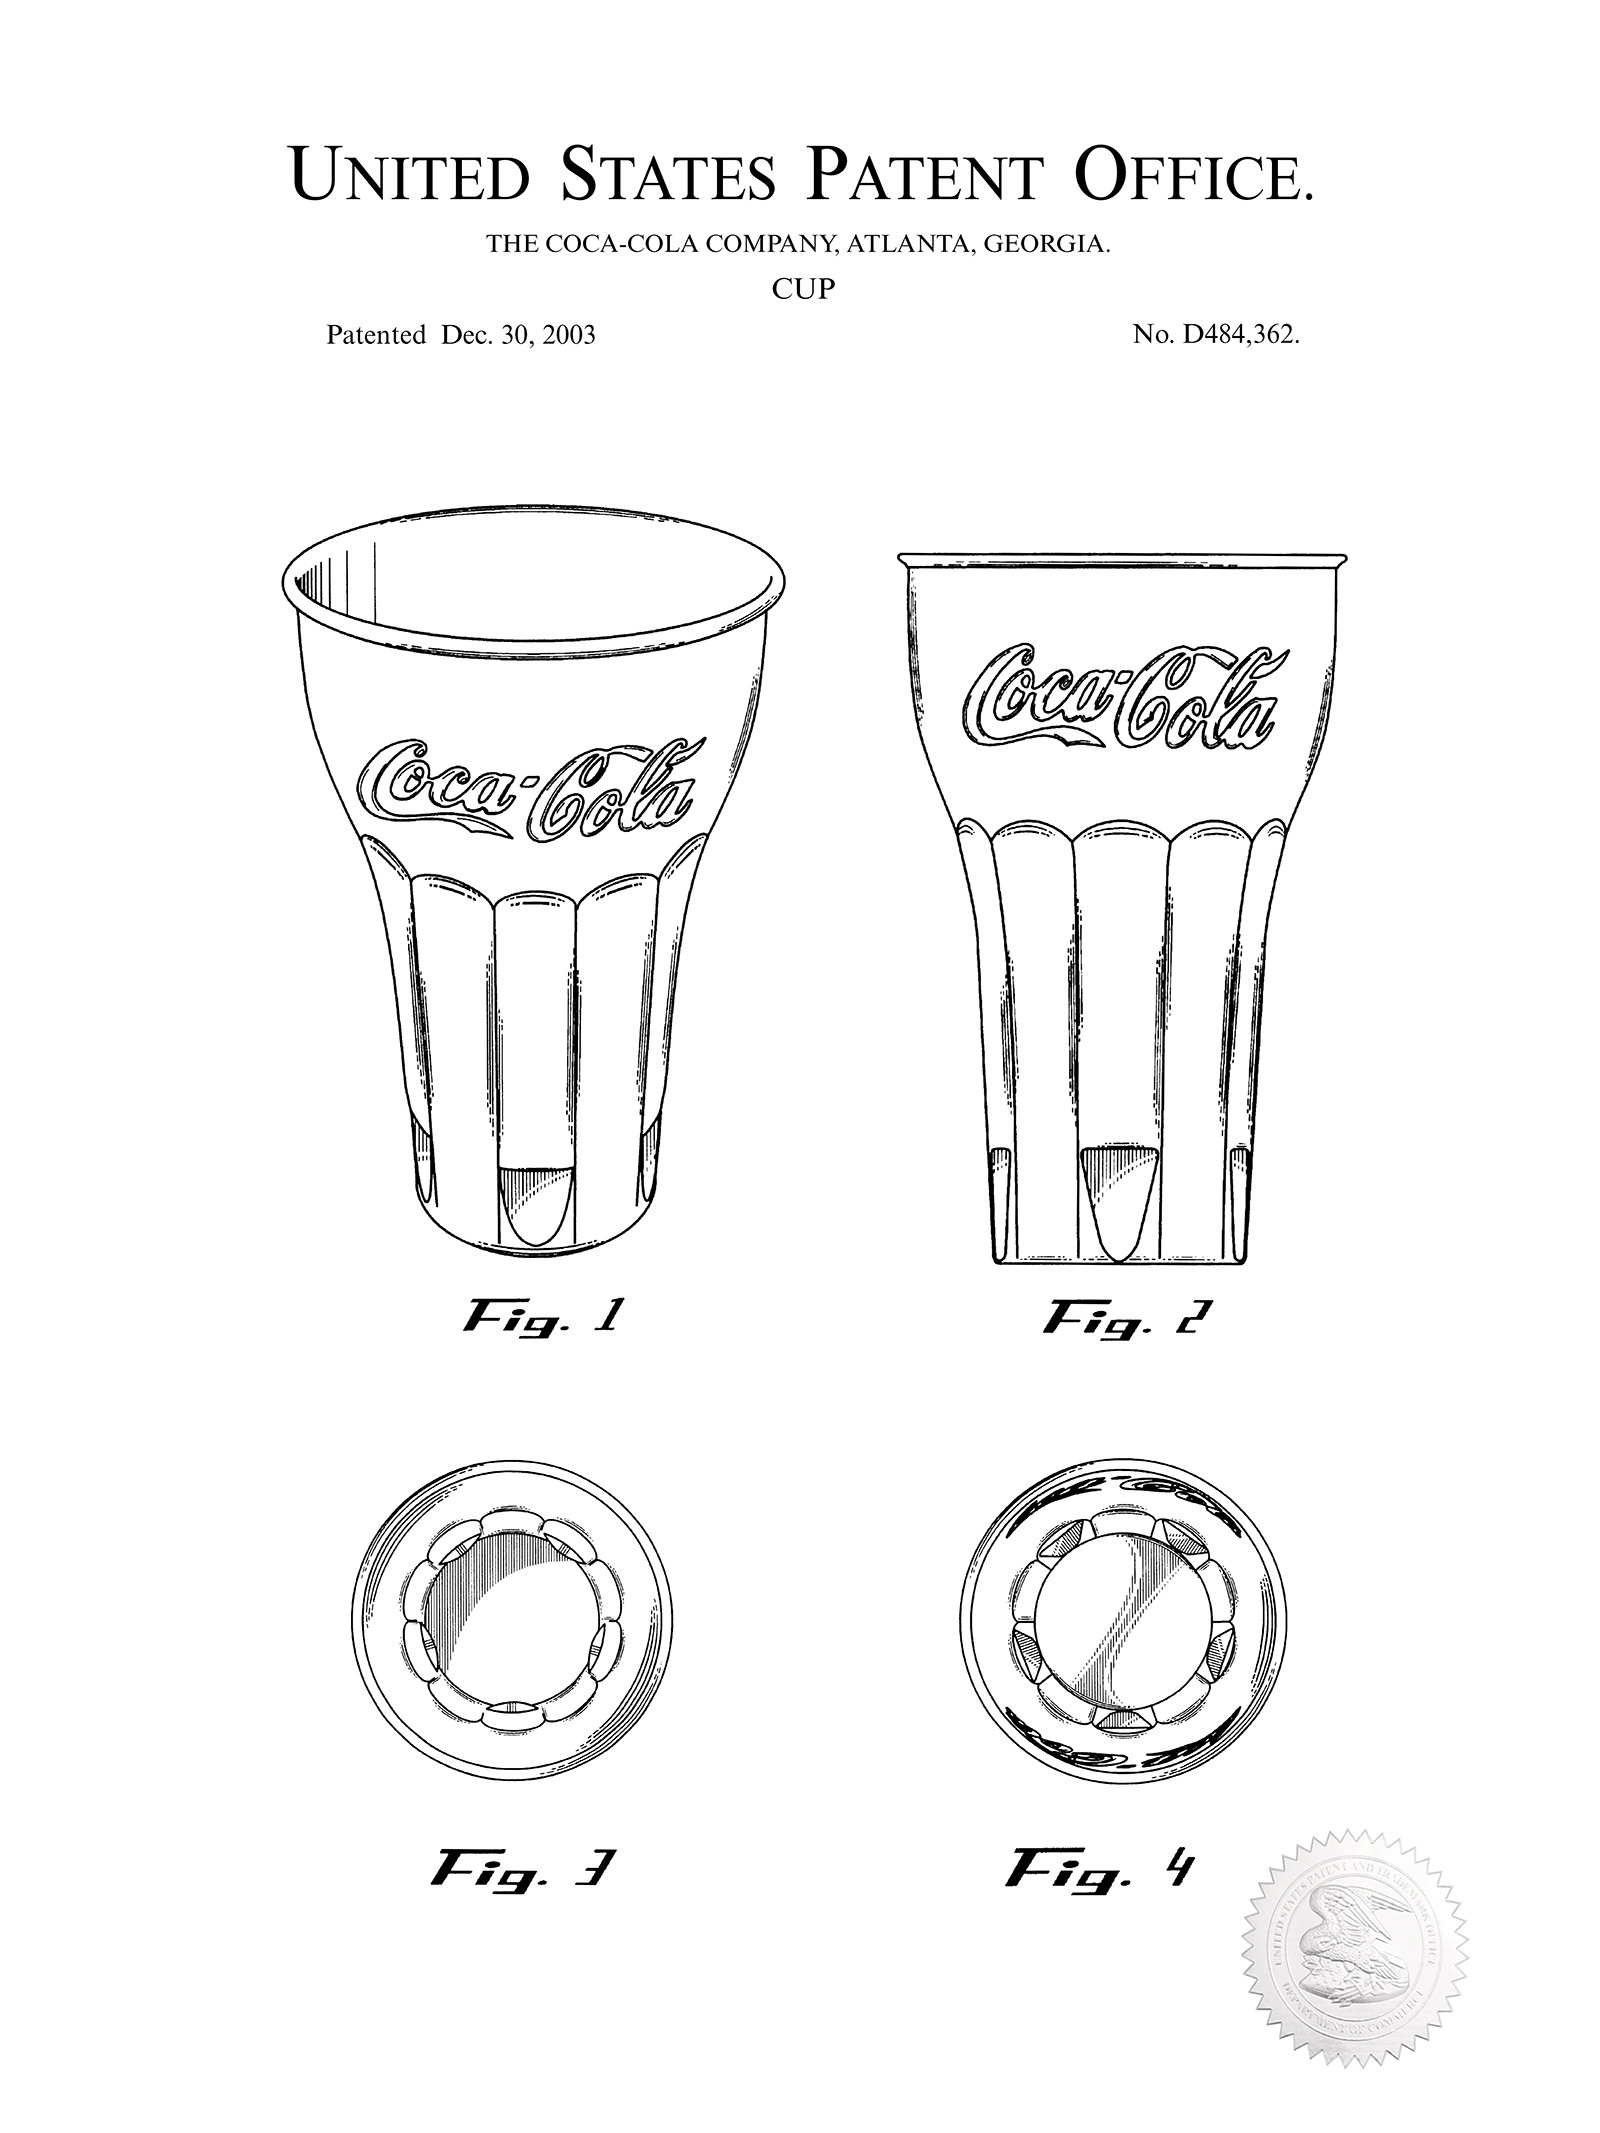 Coca-Cola Glass, 2003 Patent Print